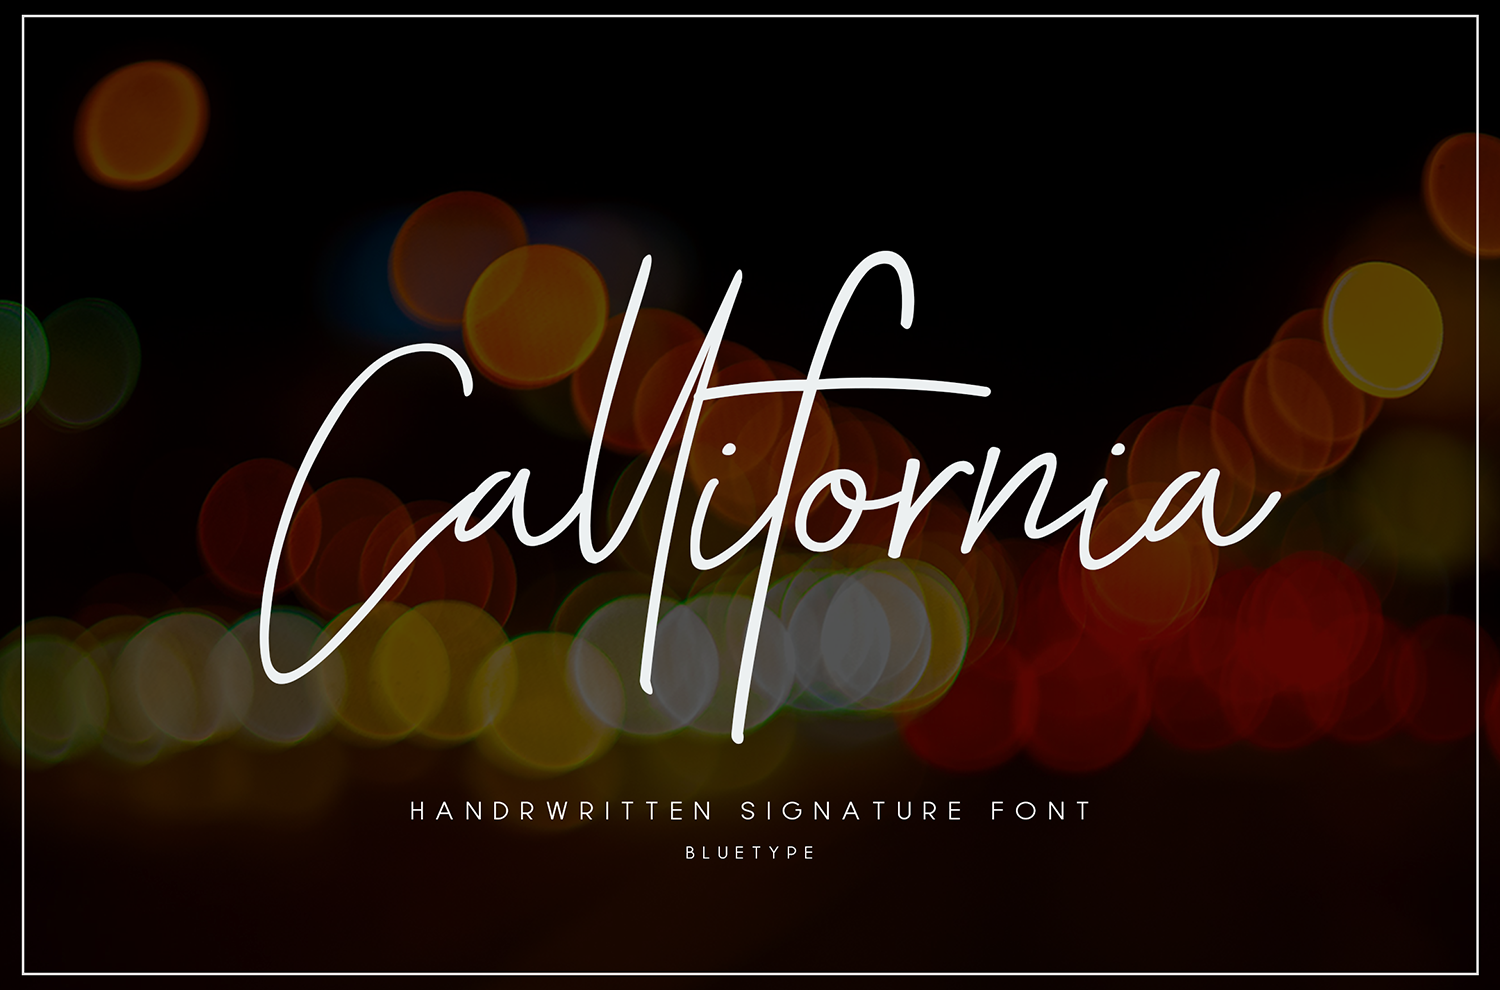 Callifornia Free Font